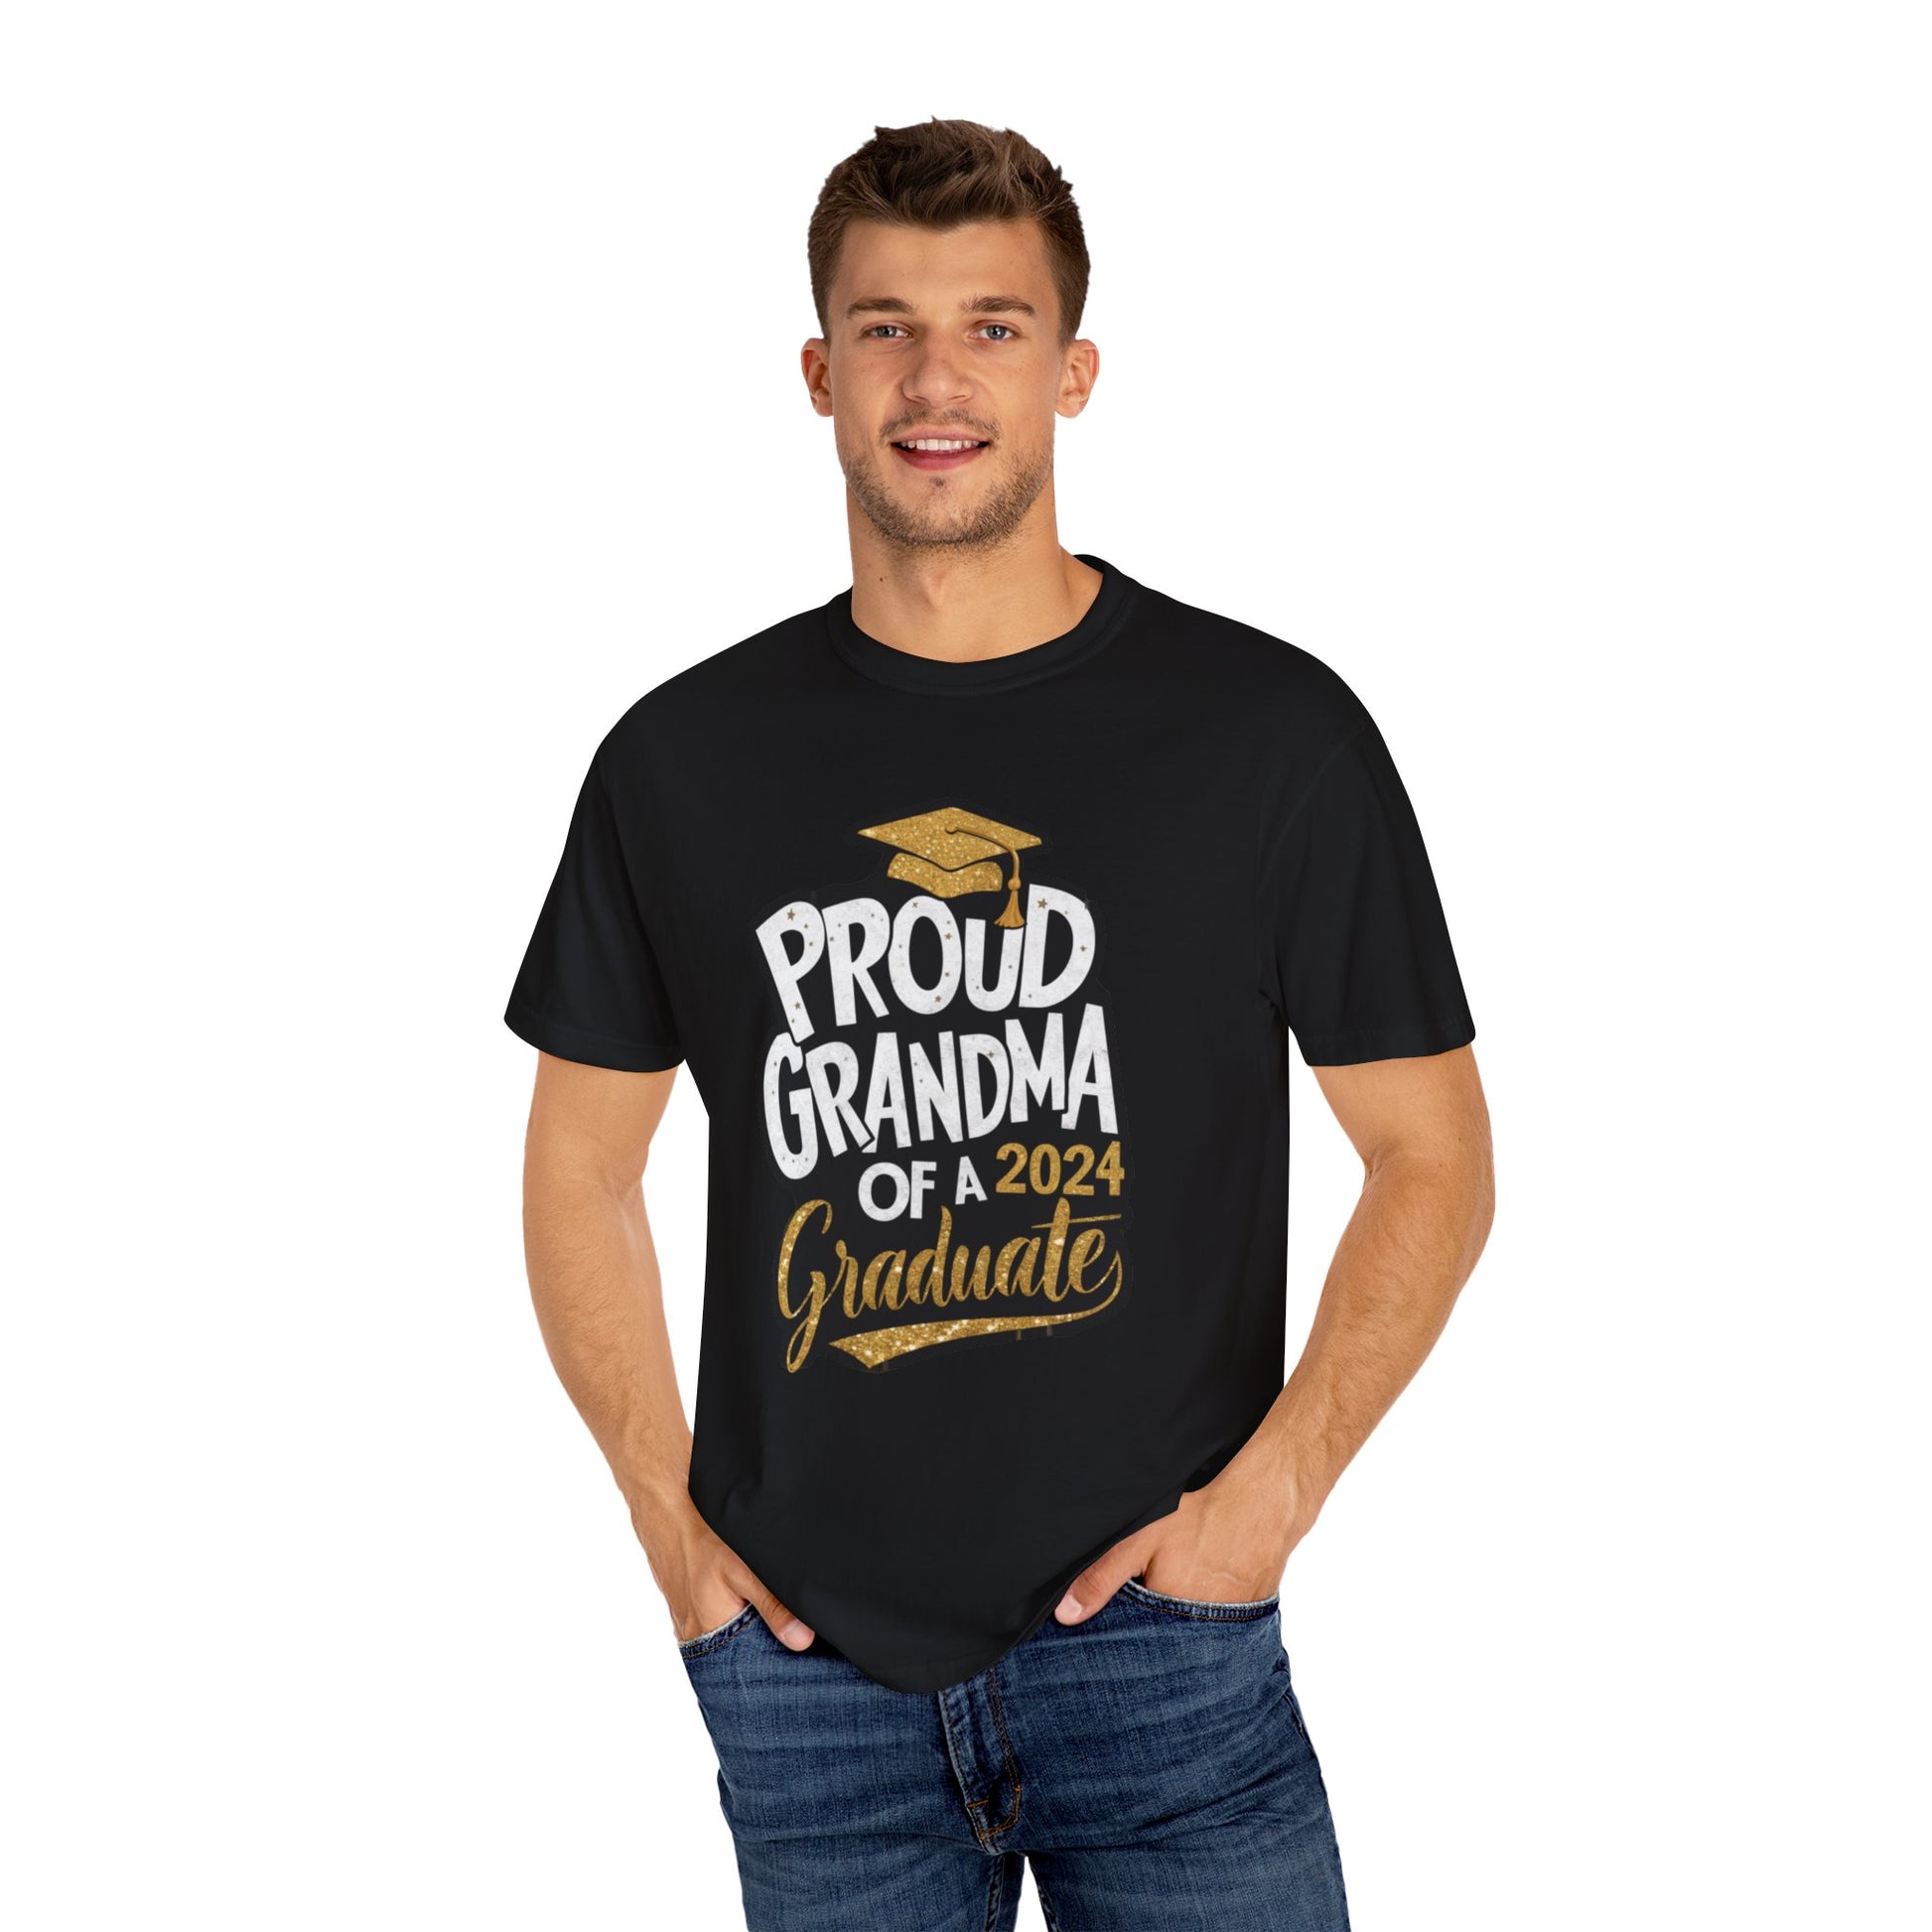 Proud of Grandma 2024 Graduate Unisex Garment-dyed T-shirt Cotton Funny Humorous Graphic Soft Premium Unisex Men Women Black T-shirt Birthday Gift-18